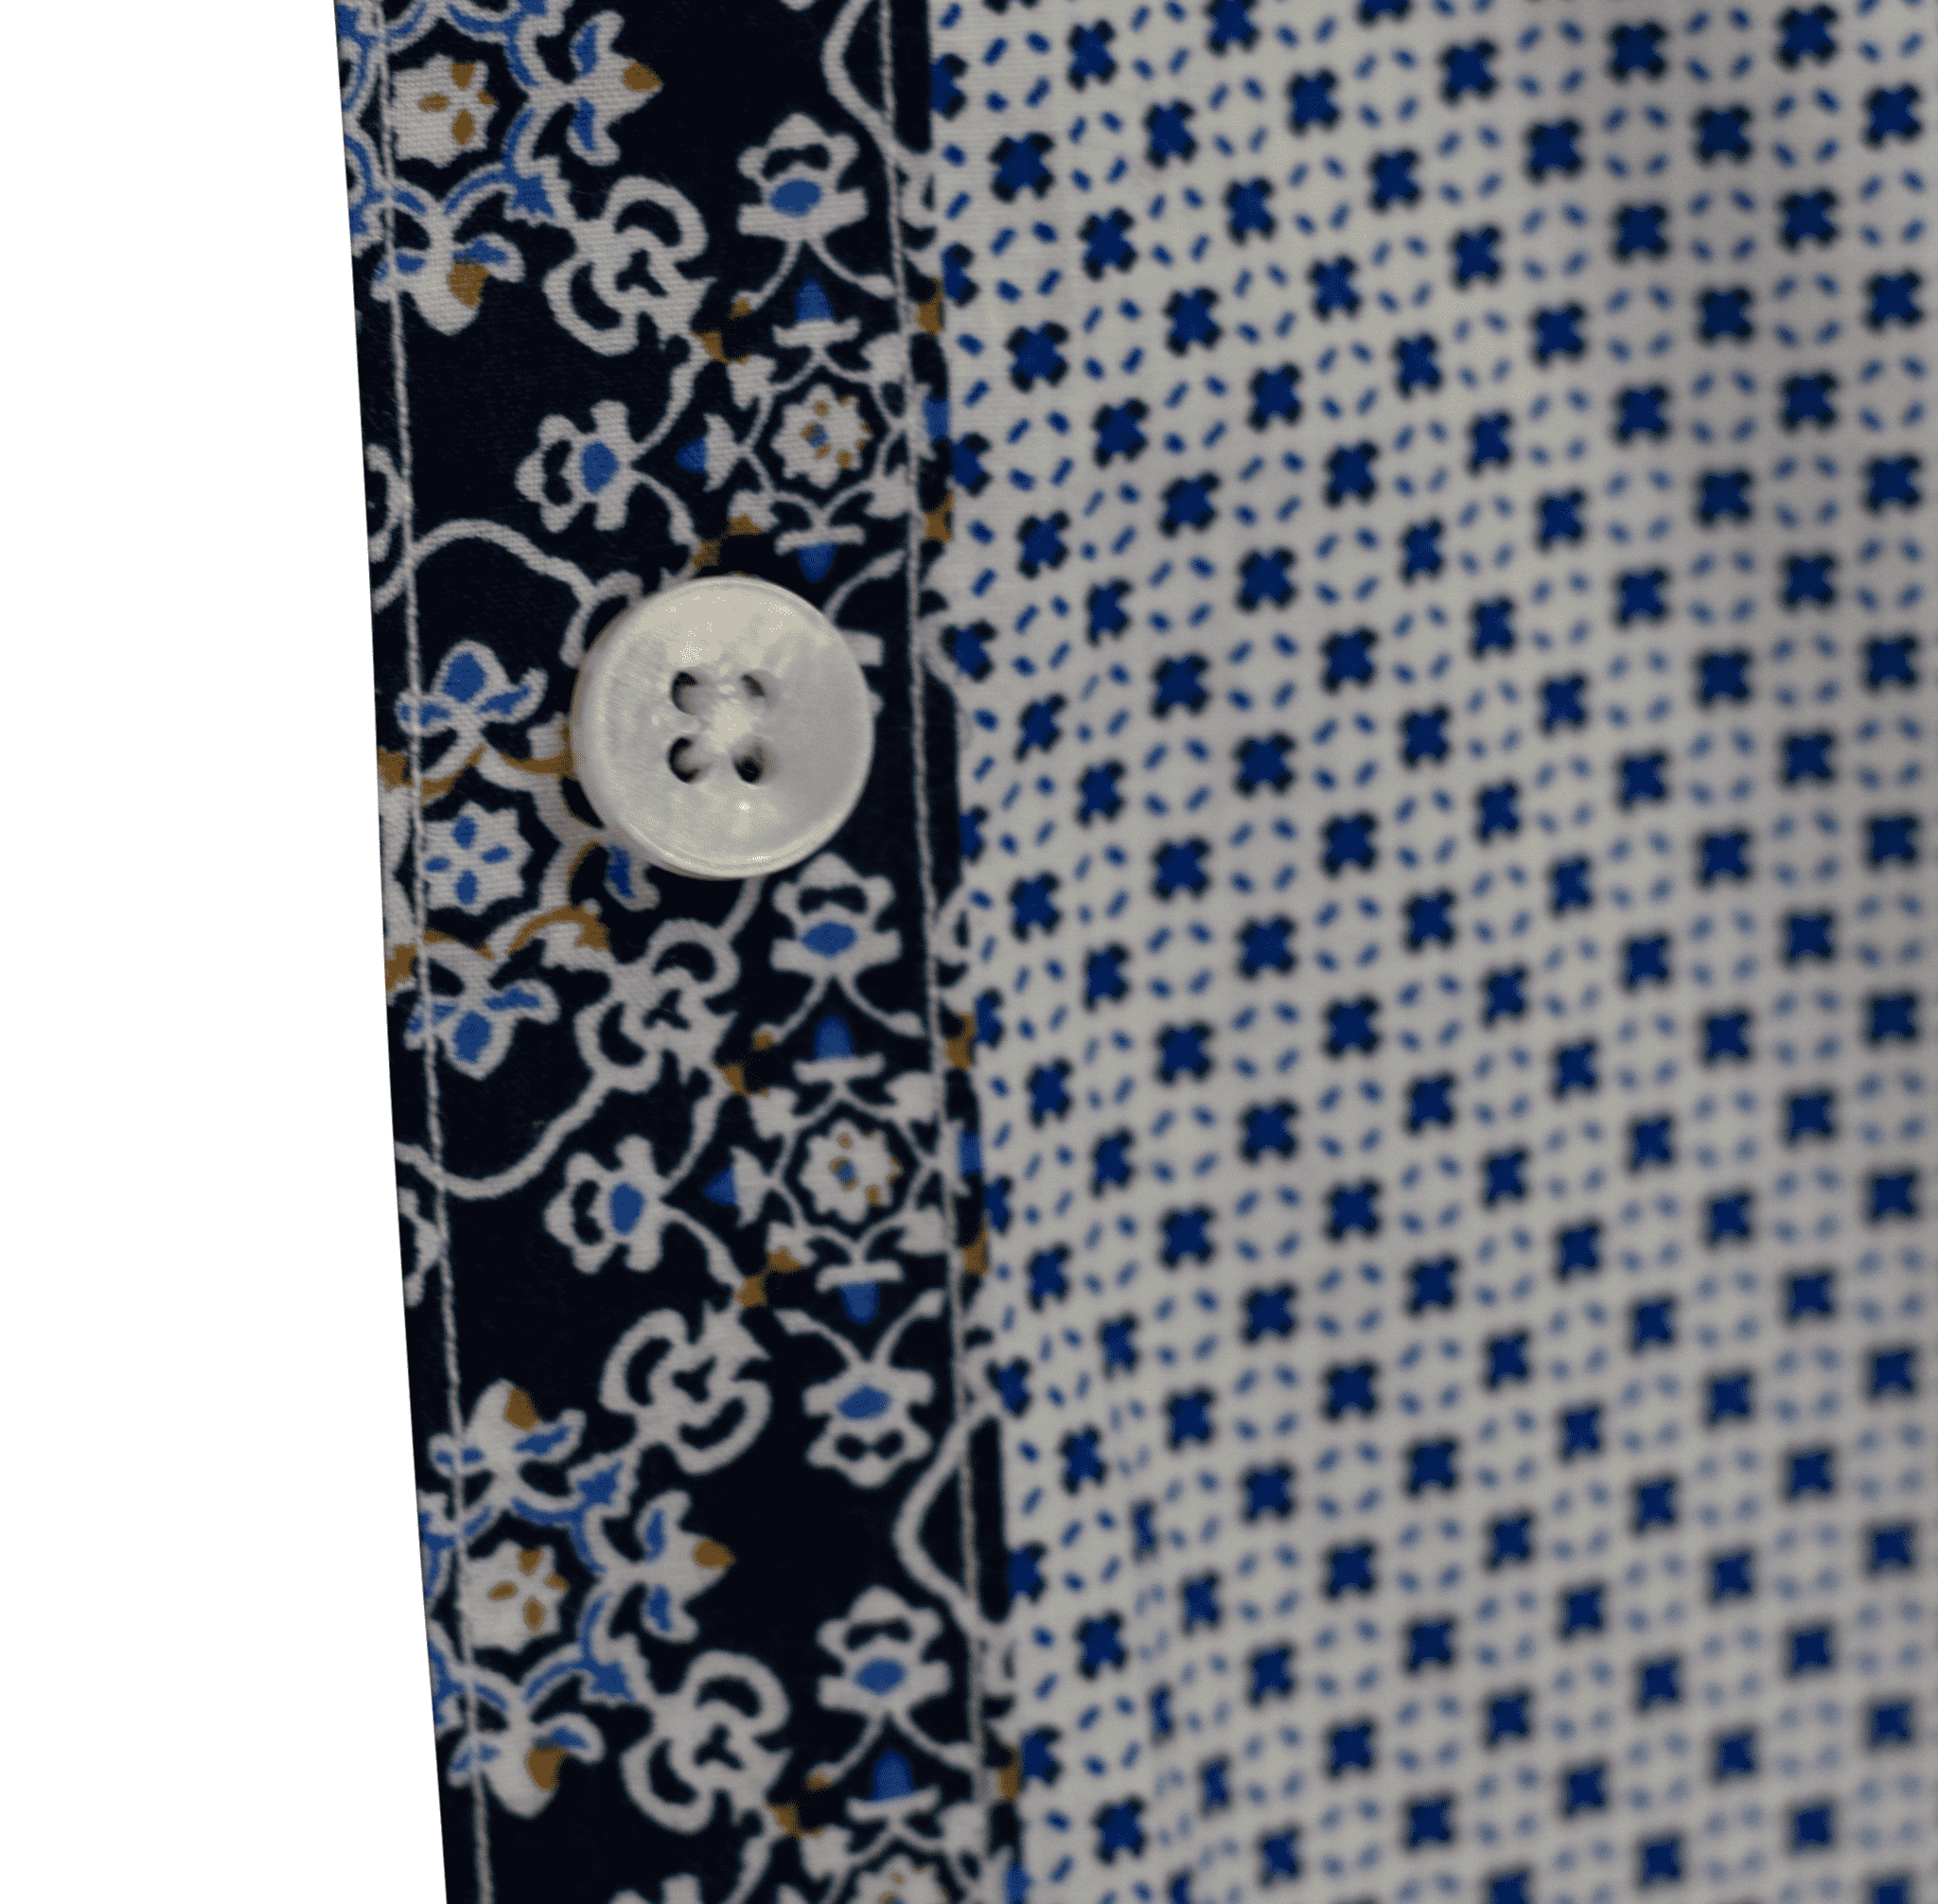 Custom Tailored Pattern Detailed Trim Dress Shirt